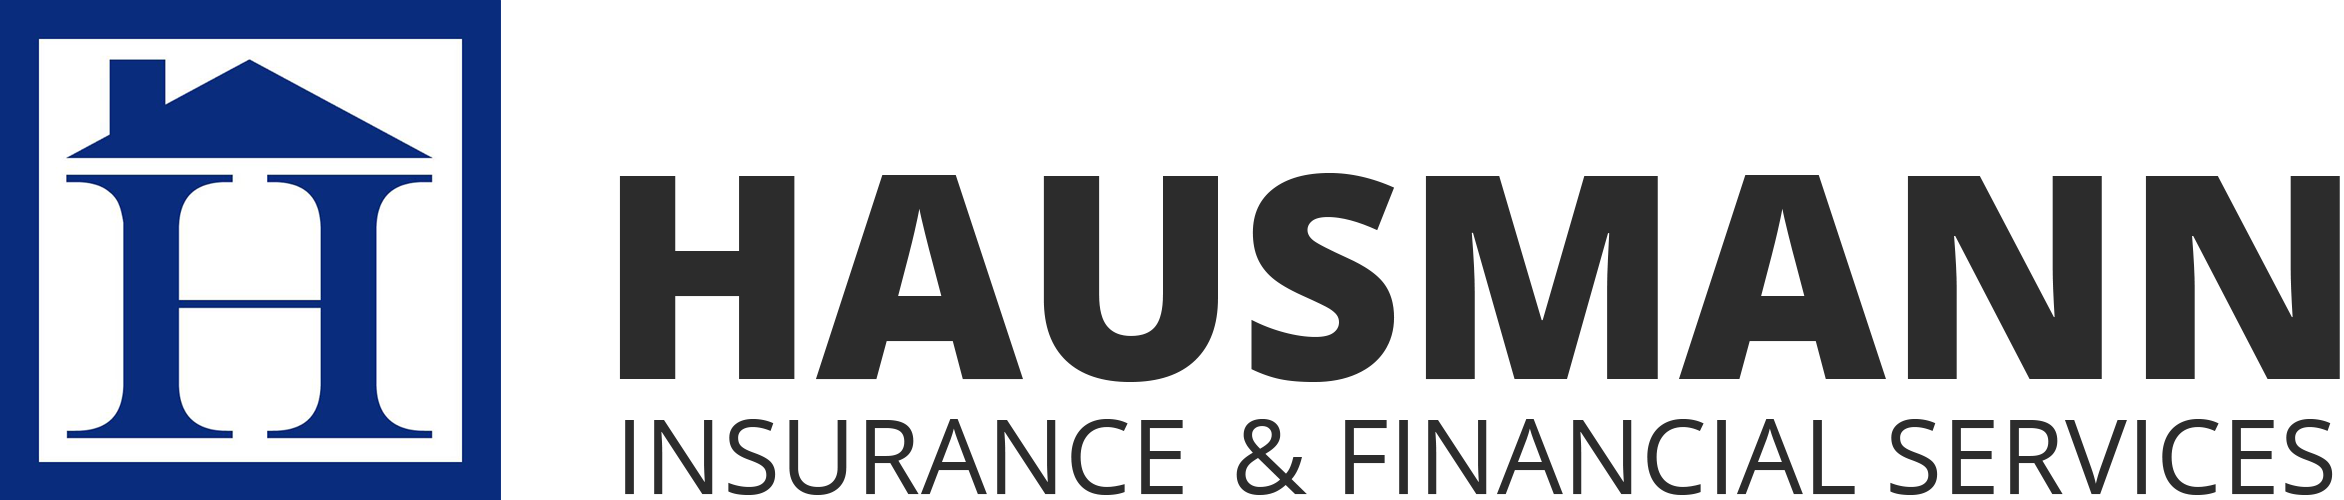 Hausmann Insurance & Financial Services